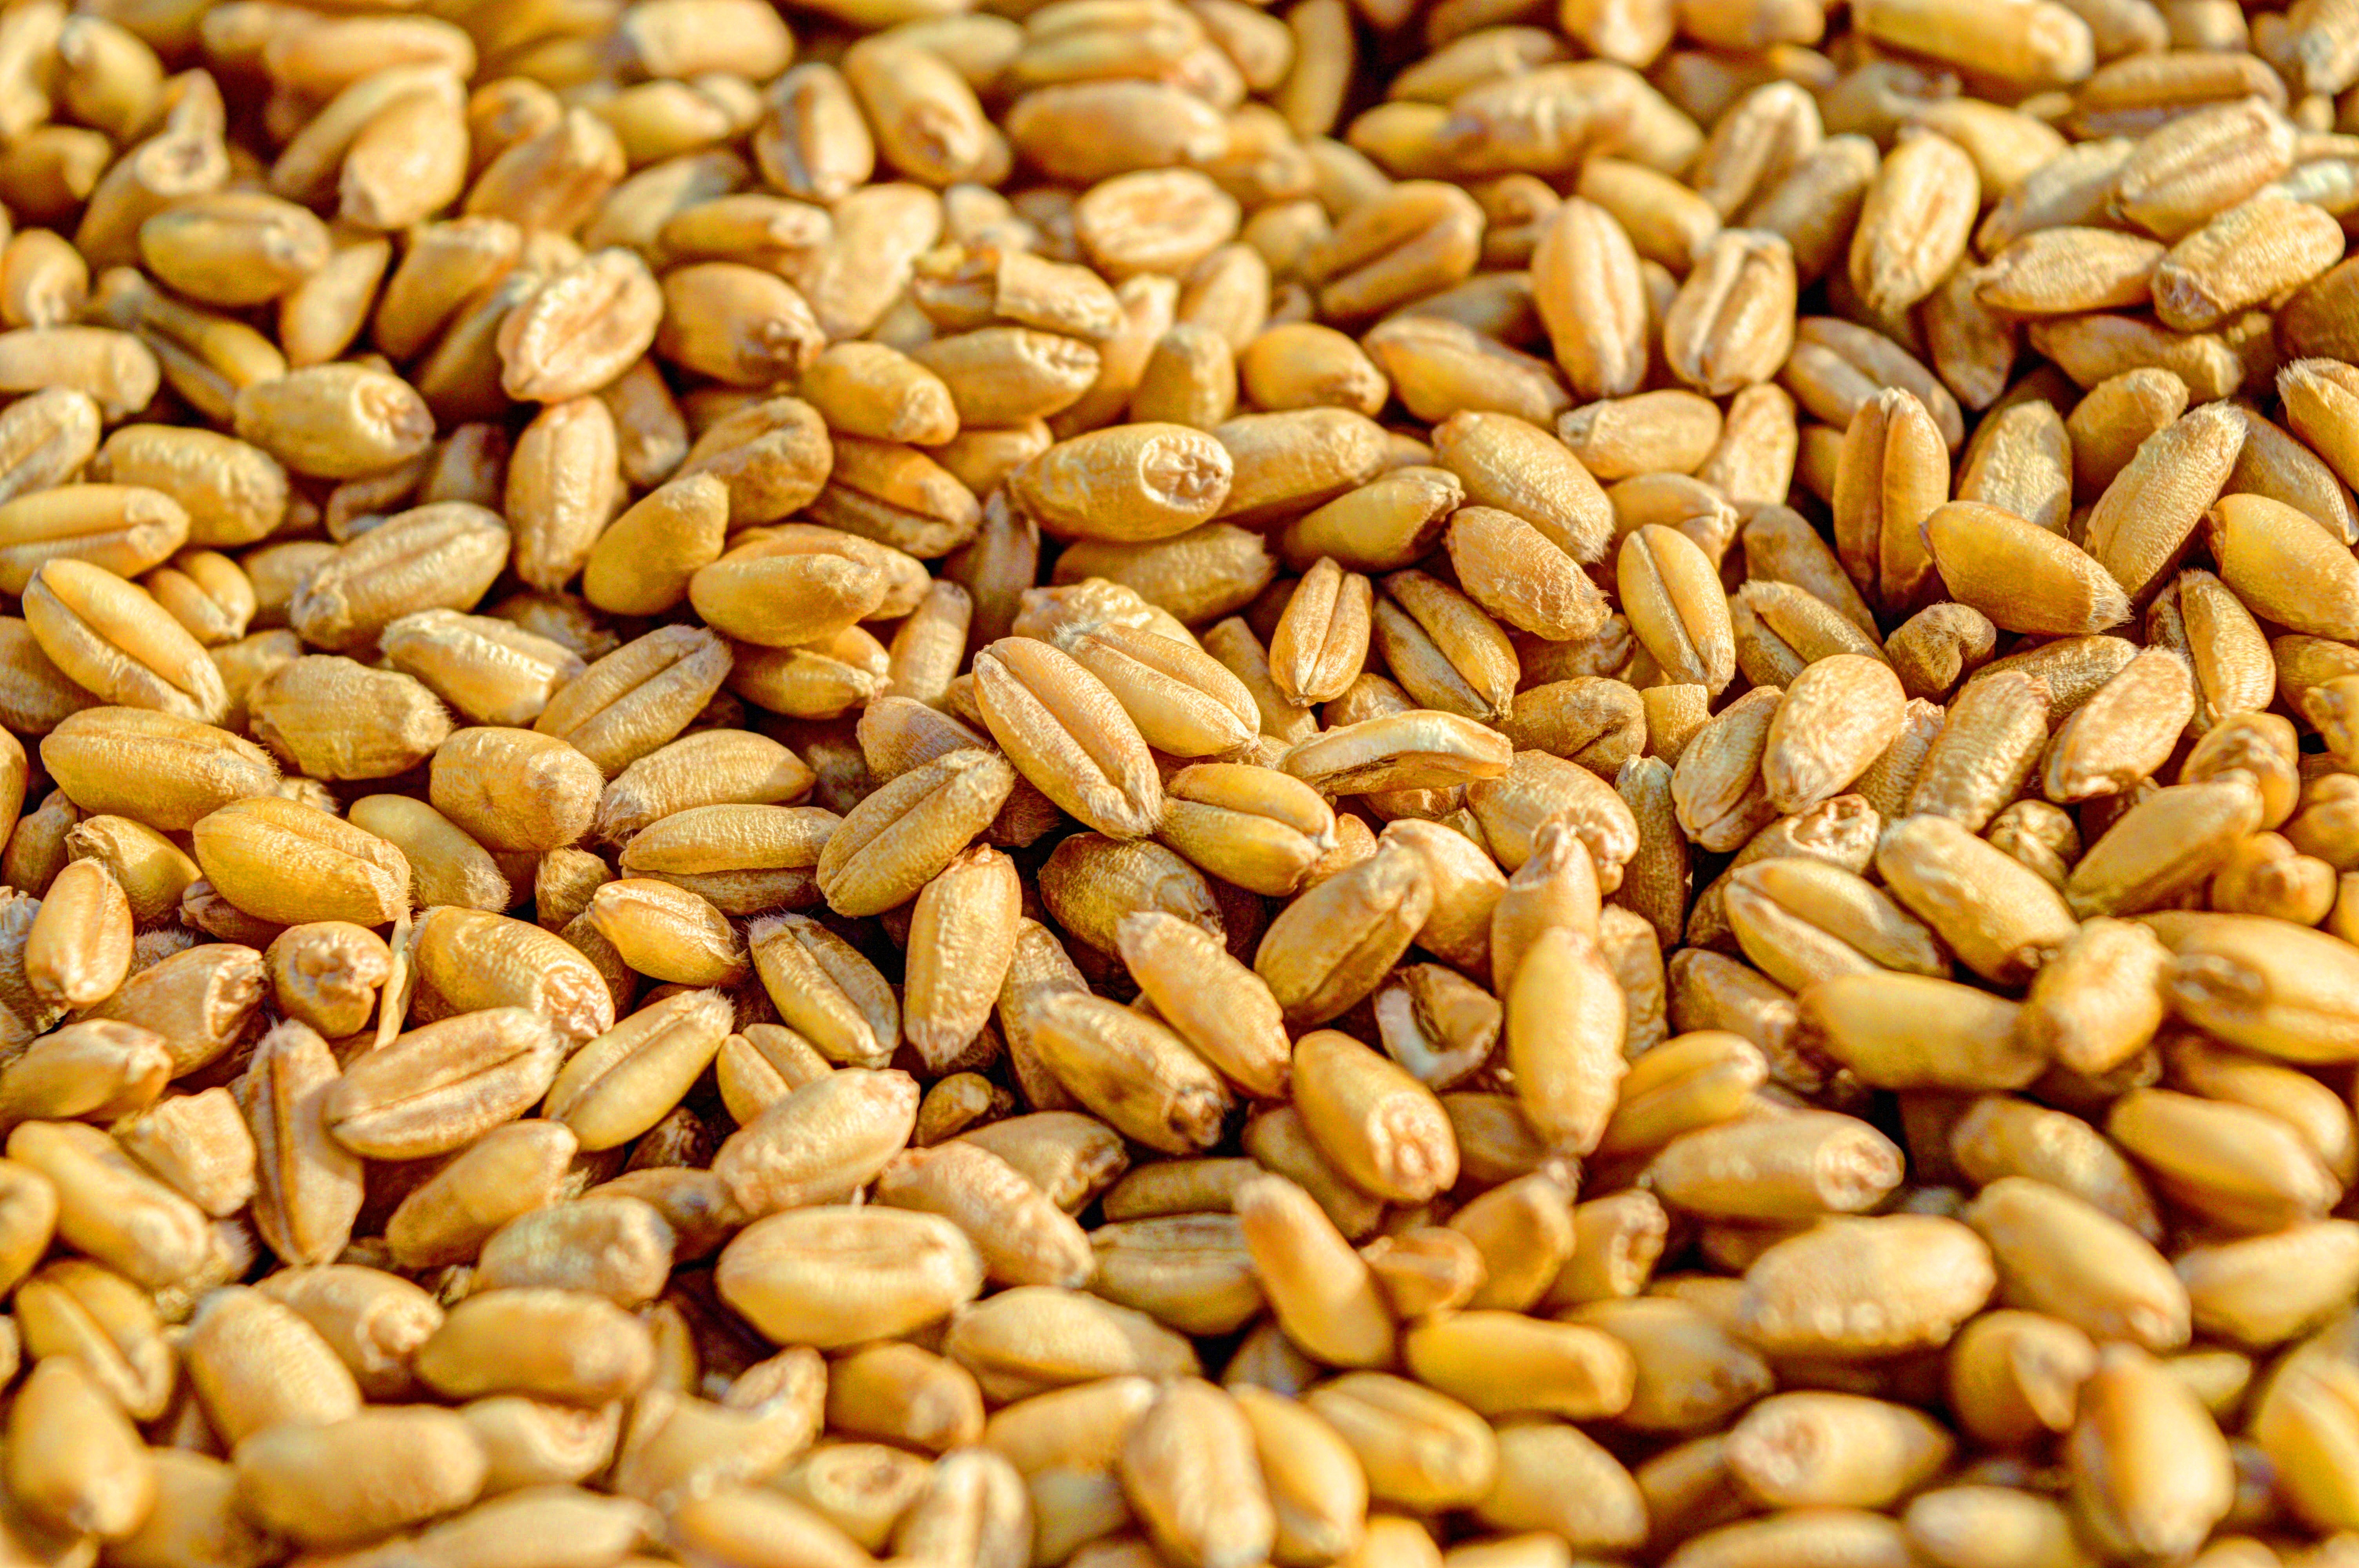 Wheat grains containing gluten